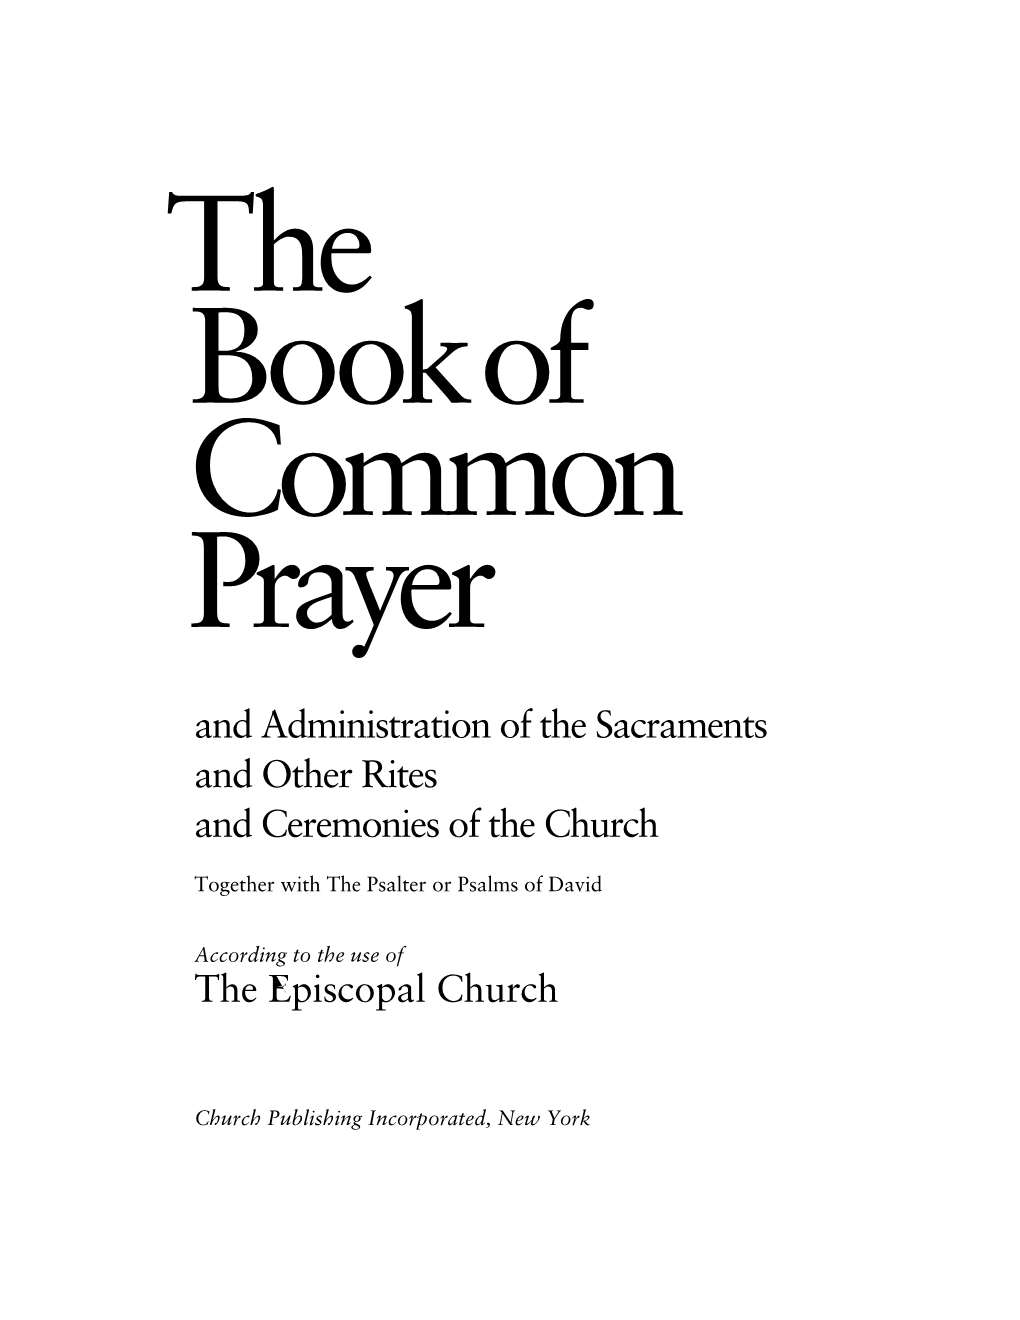 Book of Common Prayer Burial Rites